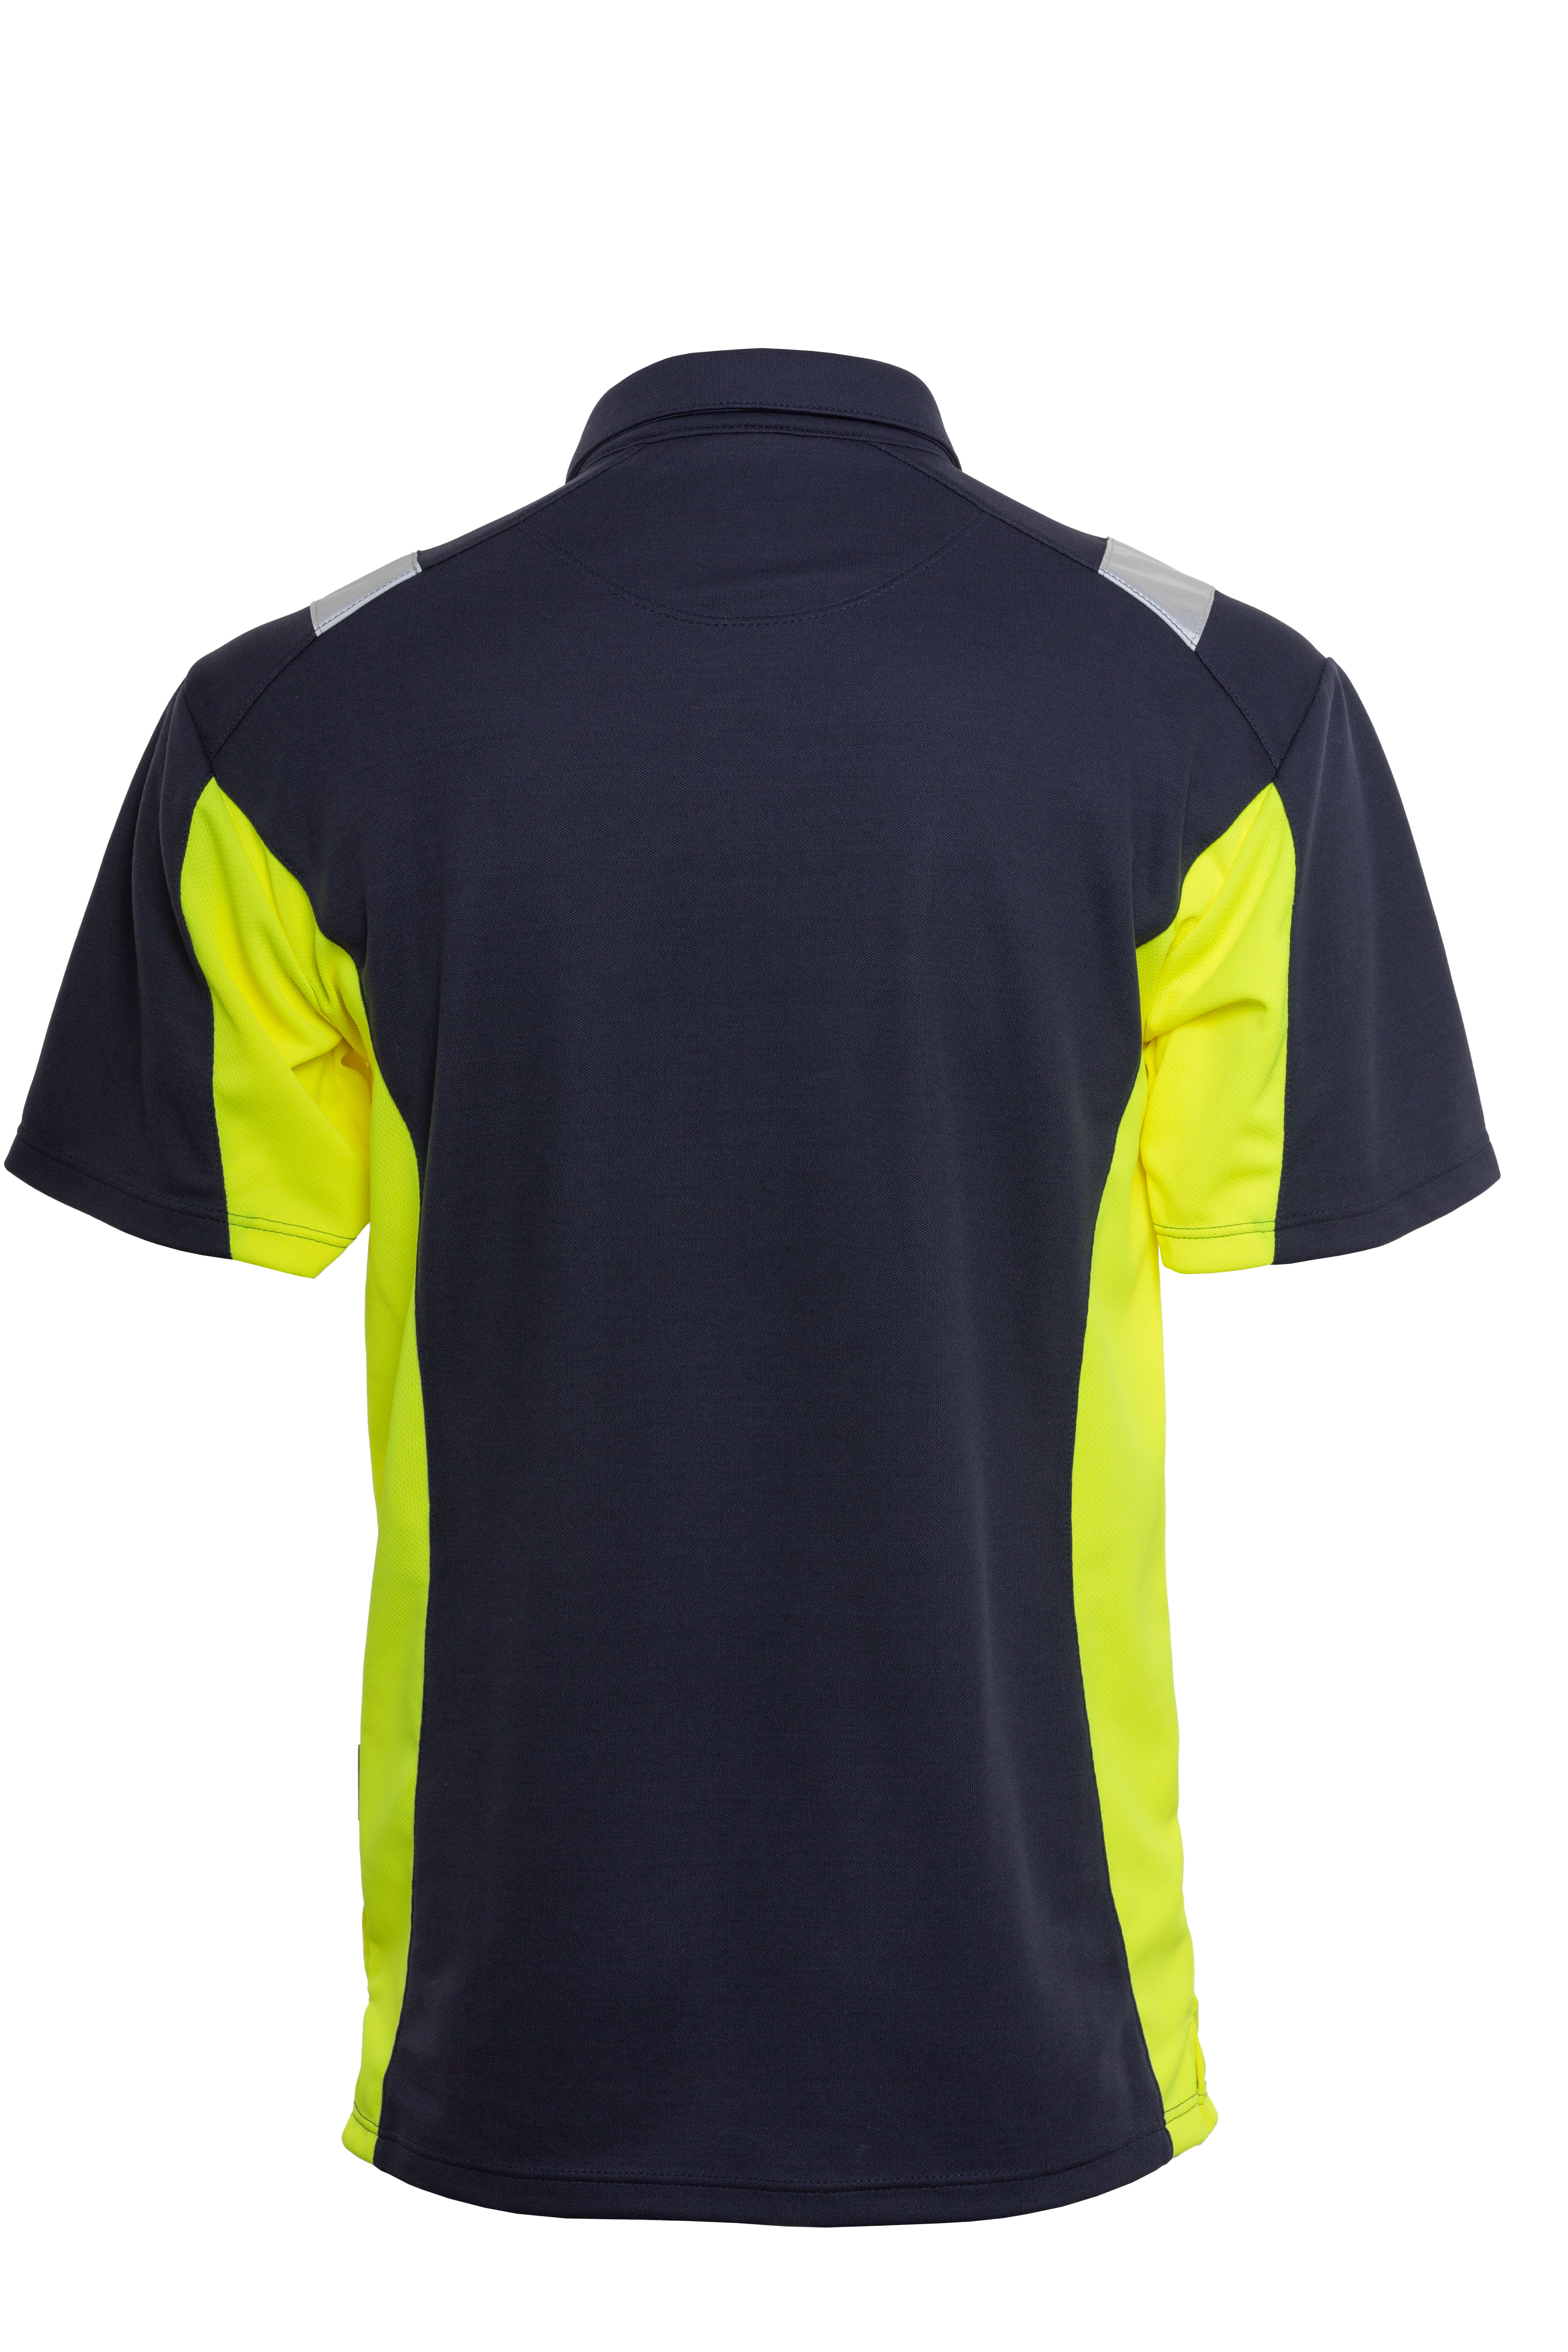 Rescuewear Poloshirt kurze Ärmel Dynamic Marineblau / Neon Gelb - S